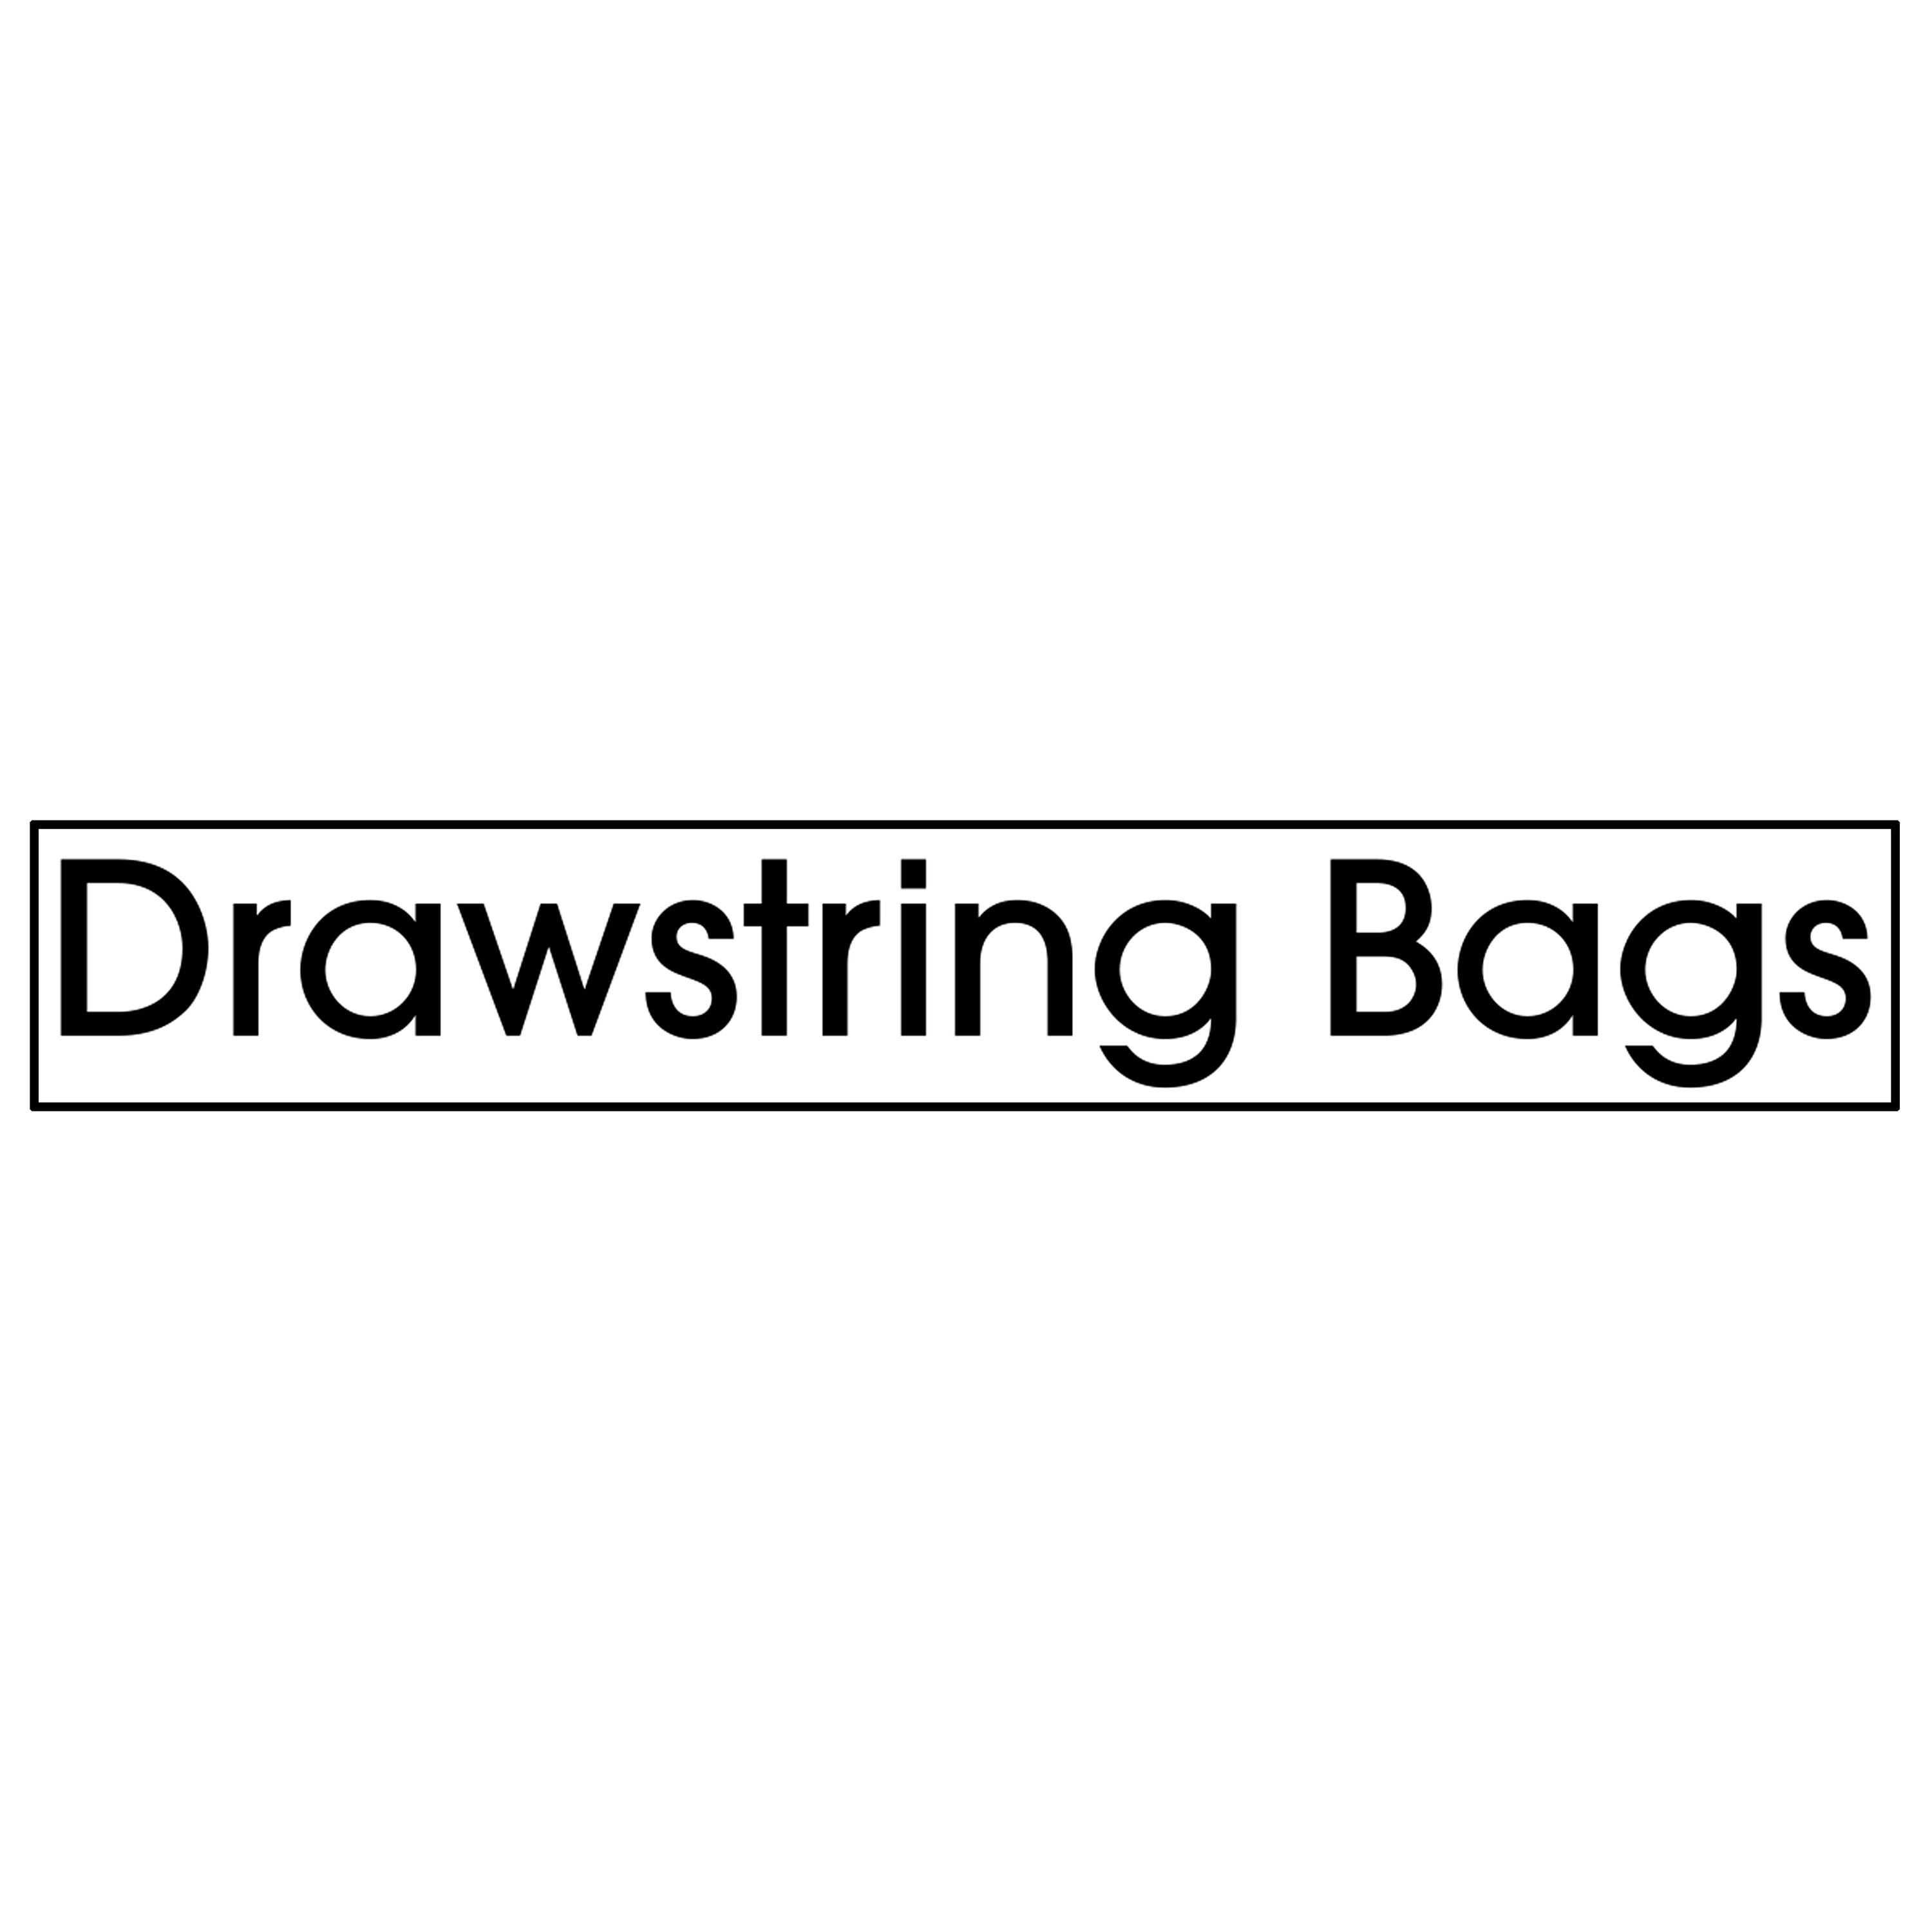 Great Value Medium Trash Drawstring Bags, 8 Gallon, 40 Count